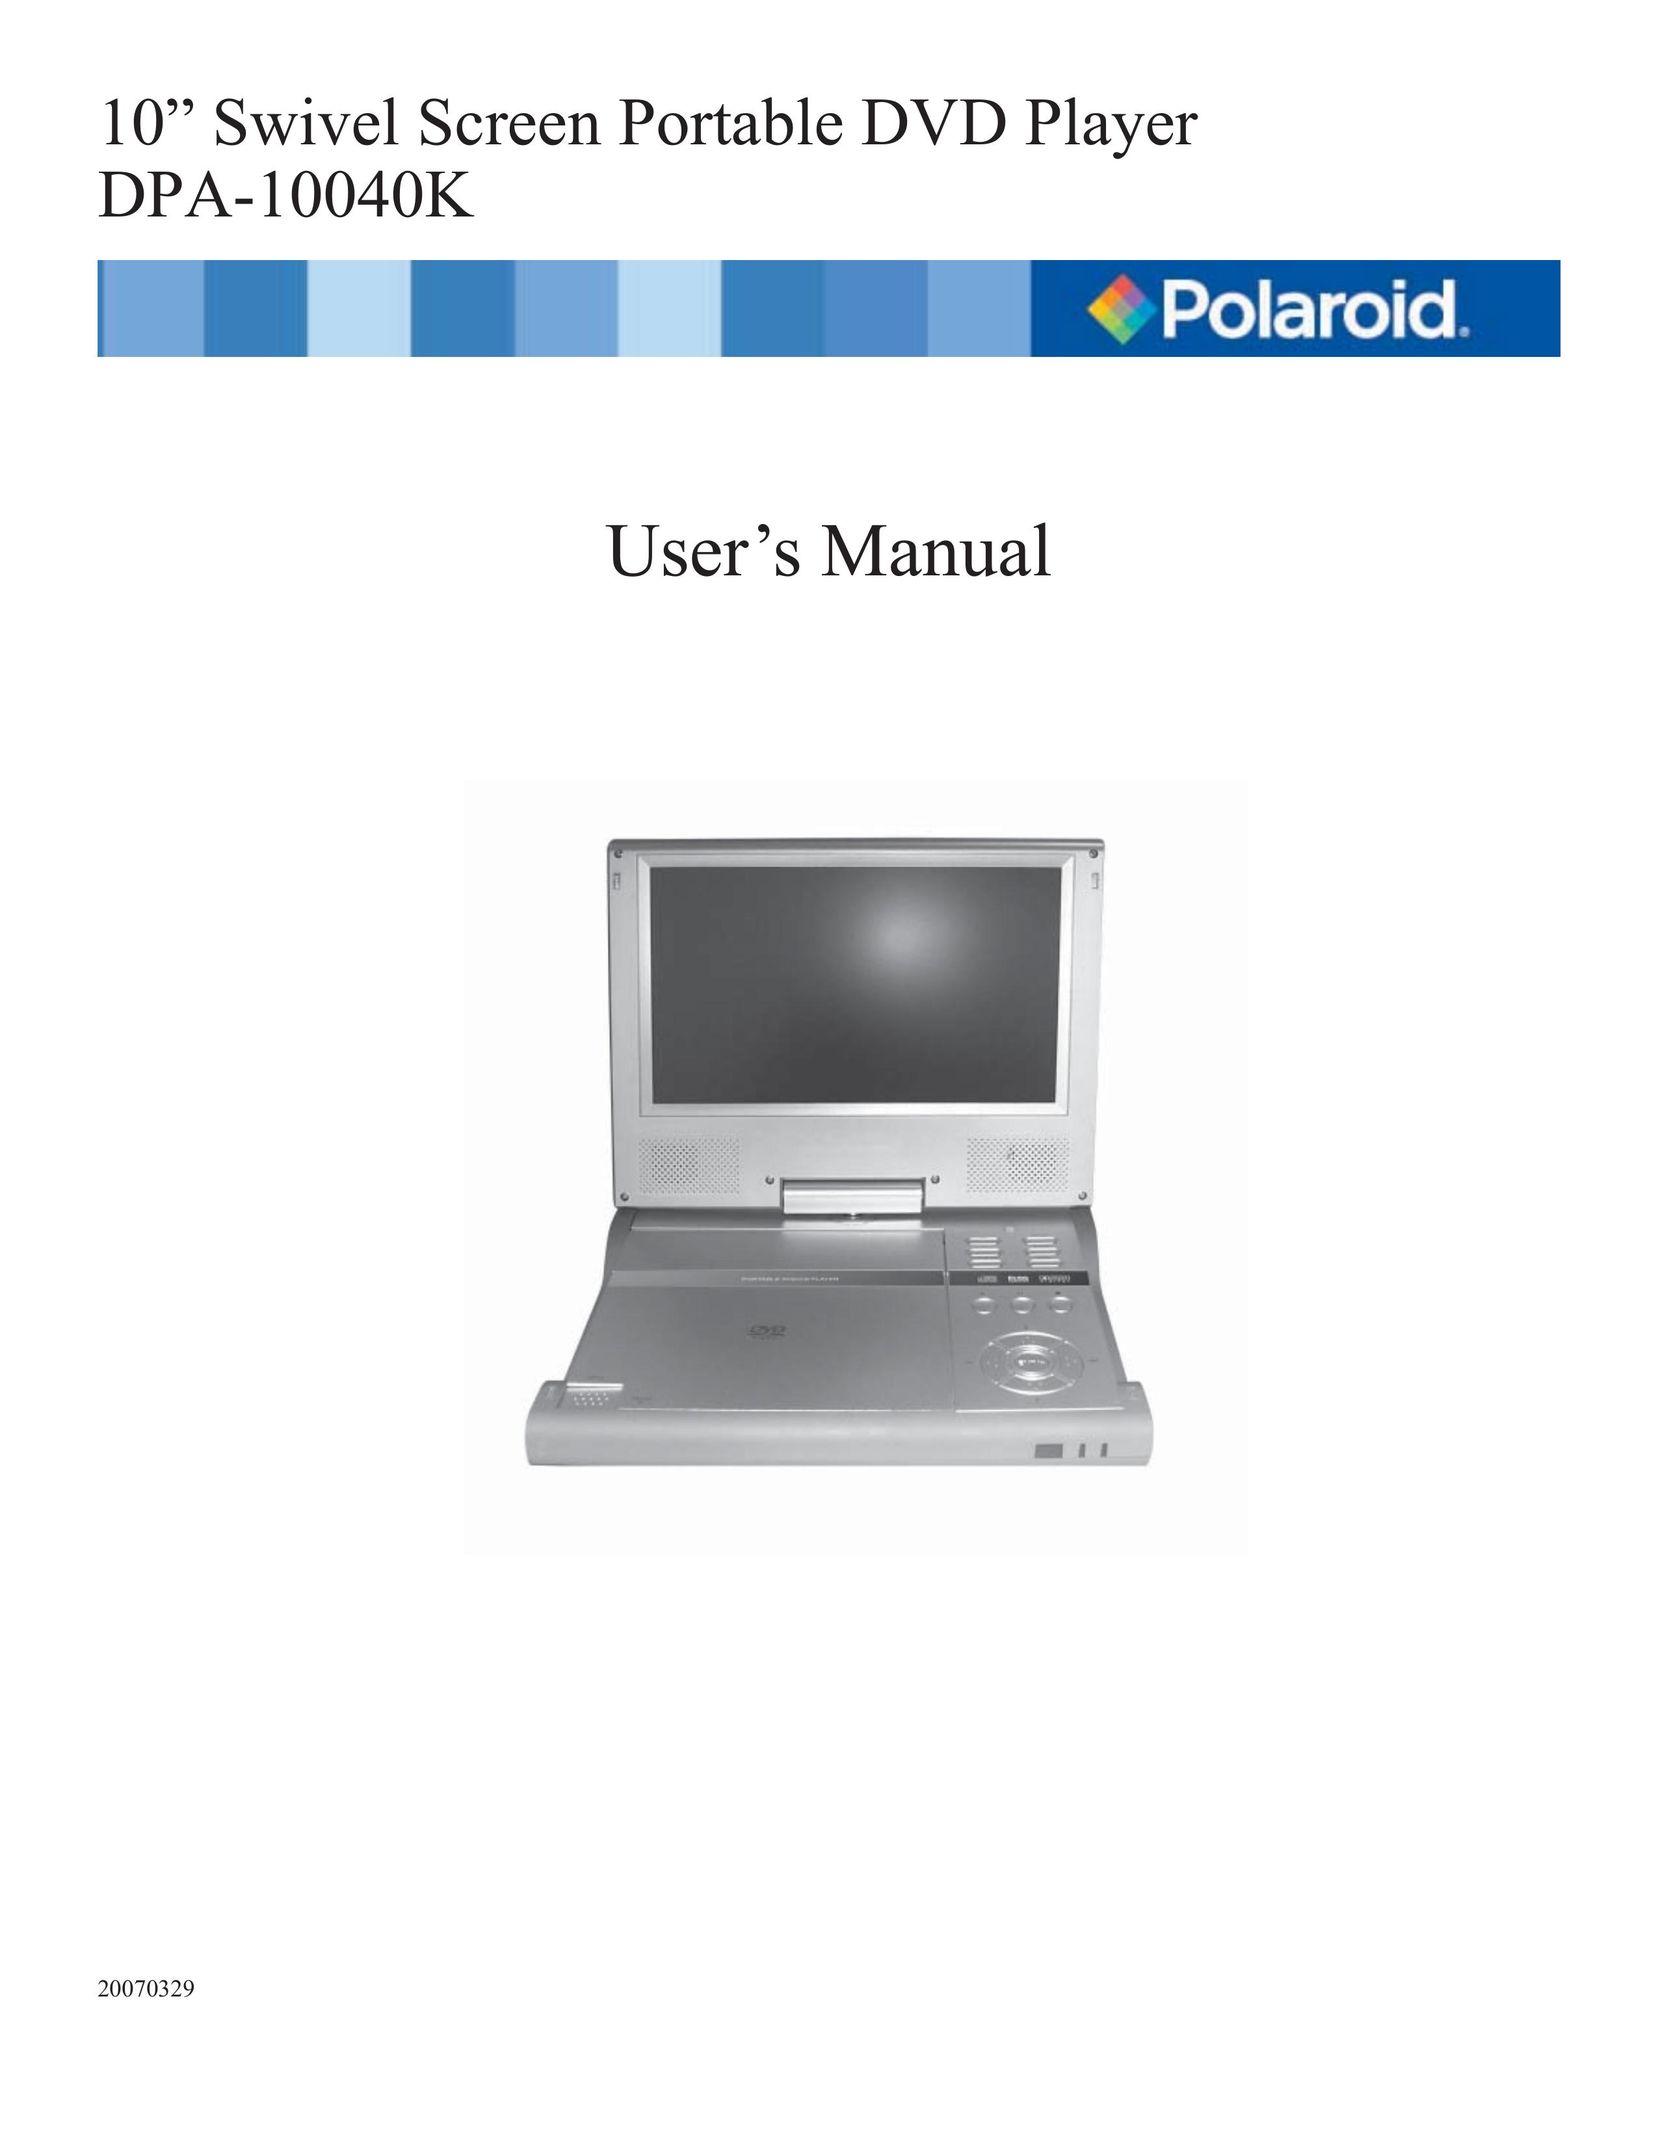 Polaroid DPA-10040K Portable DVD Player User Manual